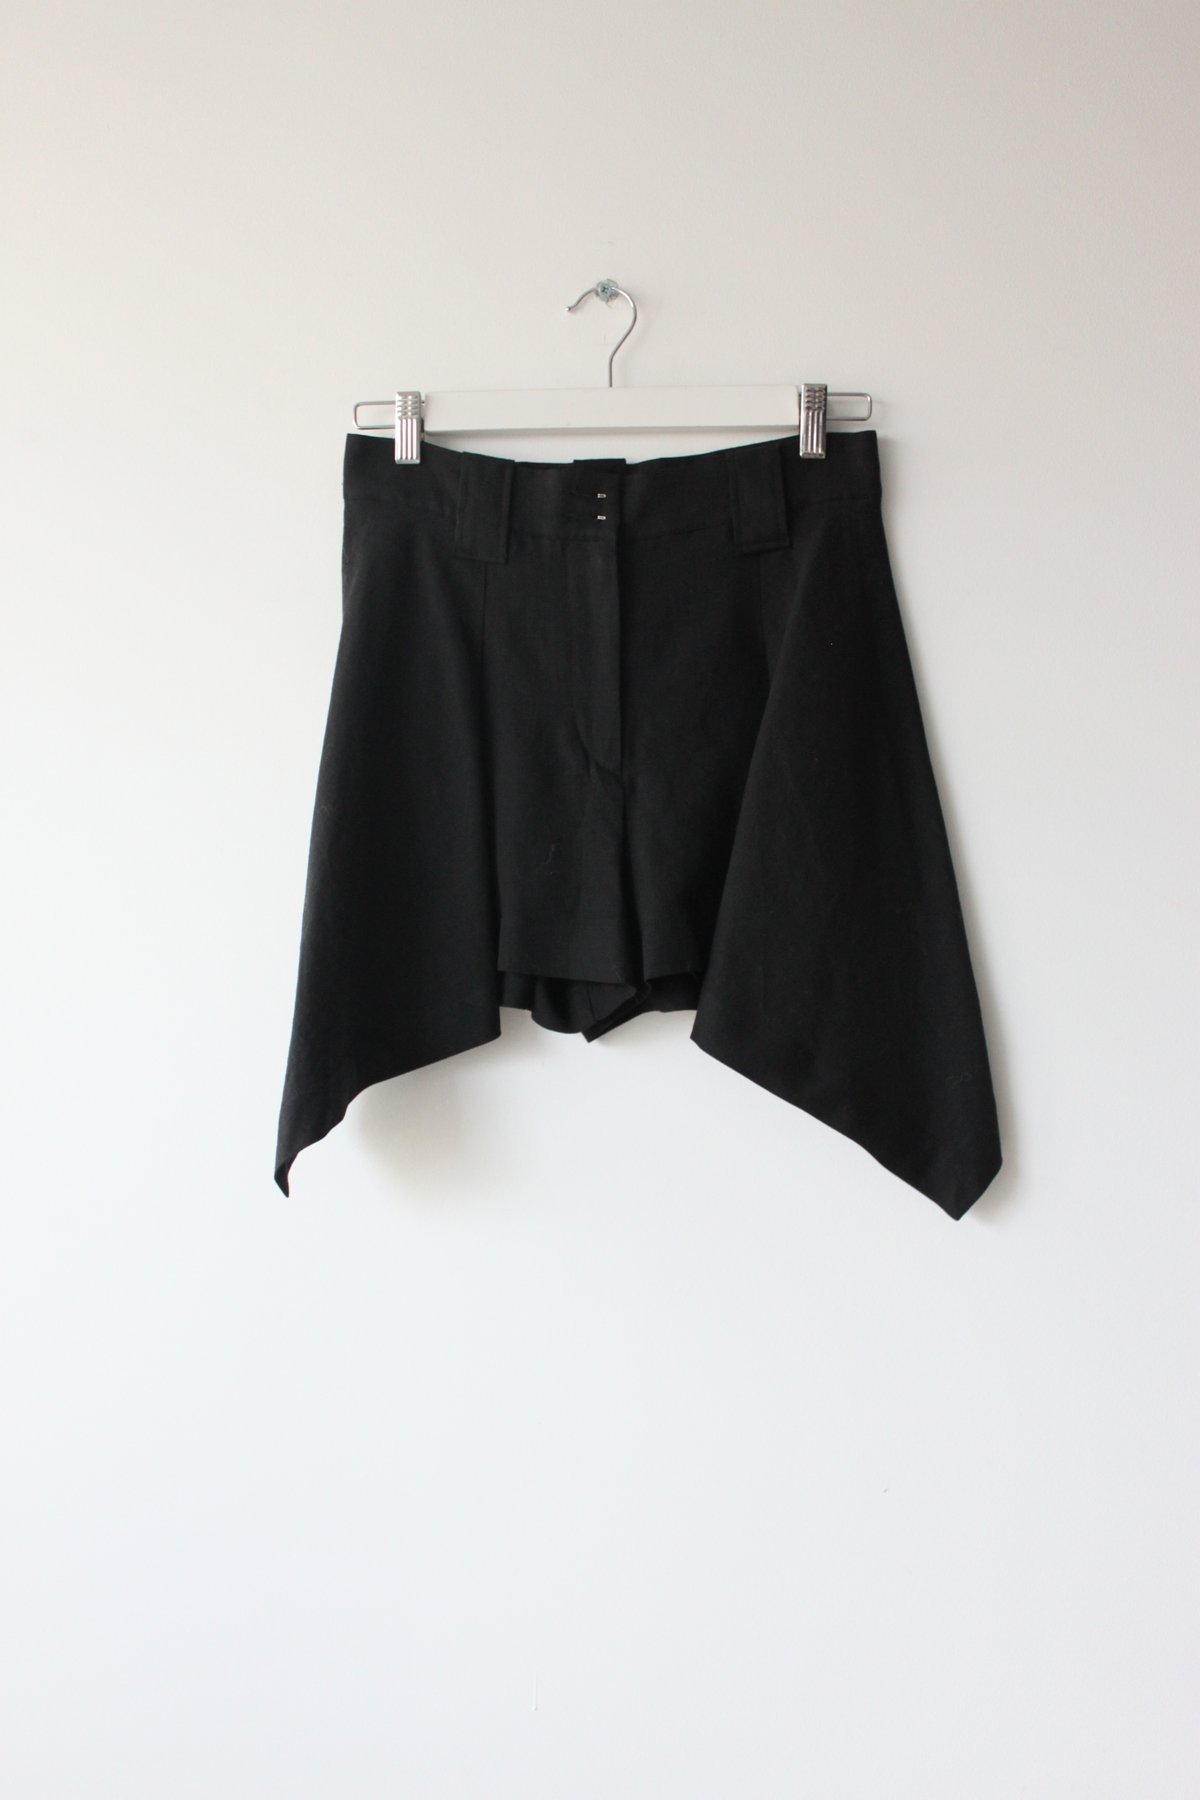 ARCHIVE-Black handkerchief cut shorts